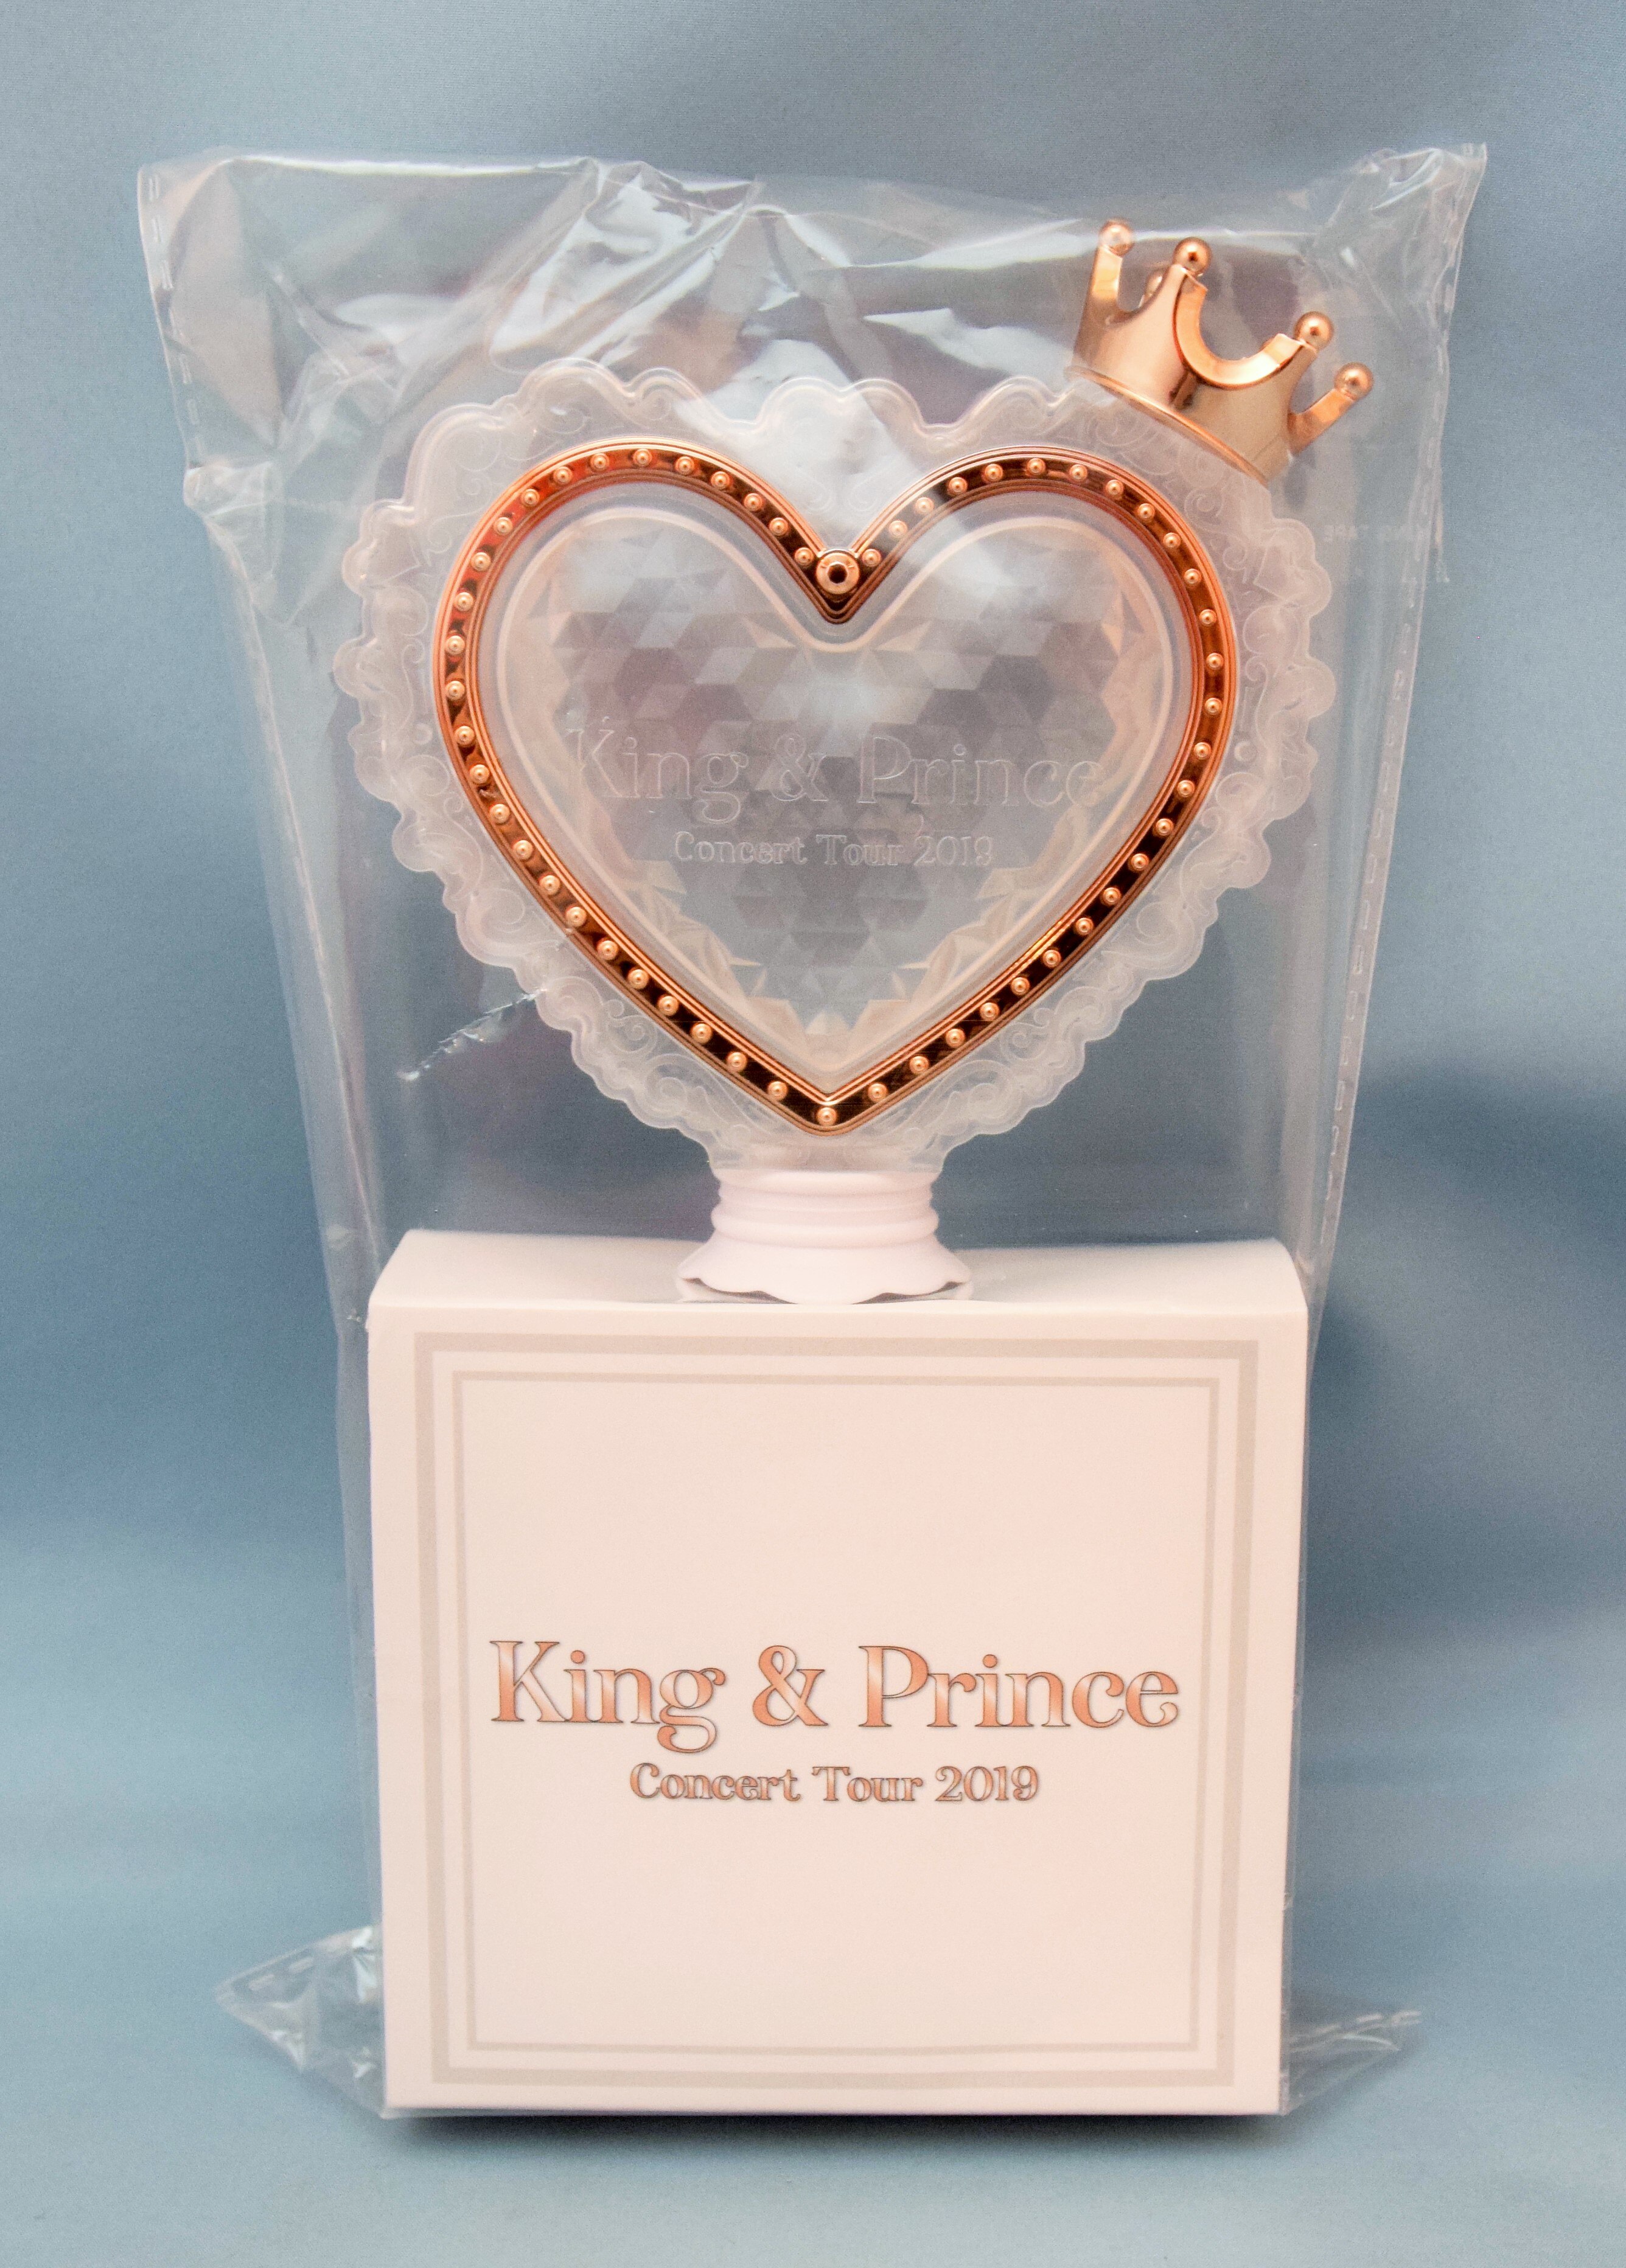 KingPrince 19年 KingPrince Concert Tour 2019 オリジナルペンライト ※台紙イタミ有 | まんだらけ  Mandarake